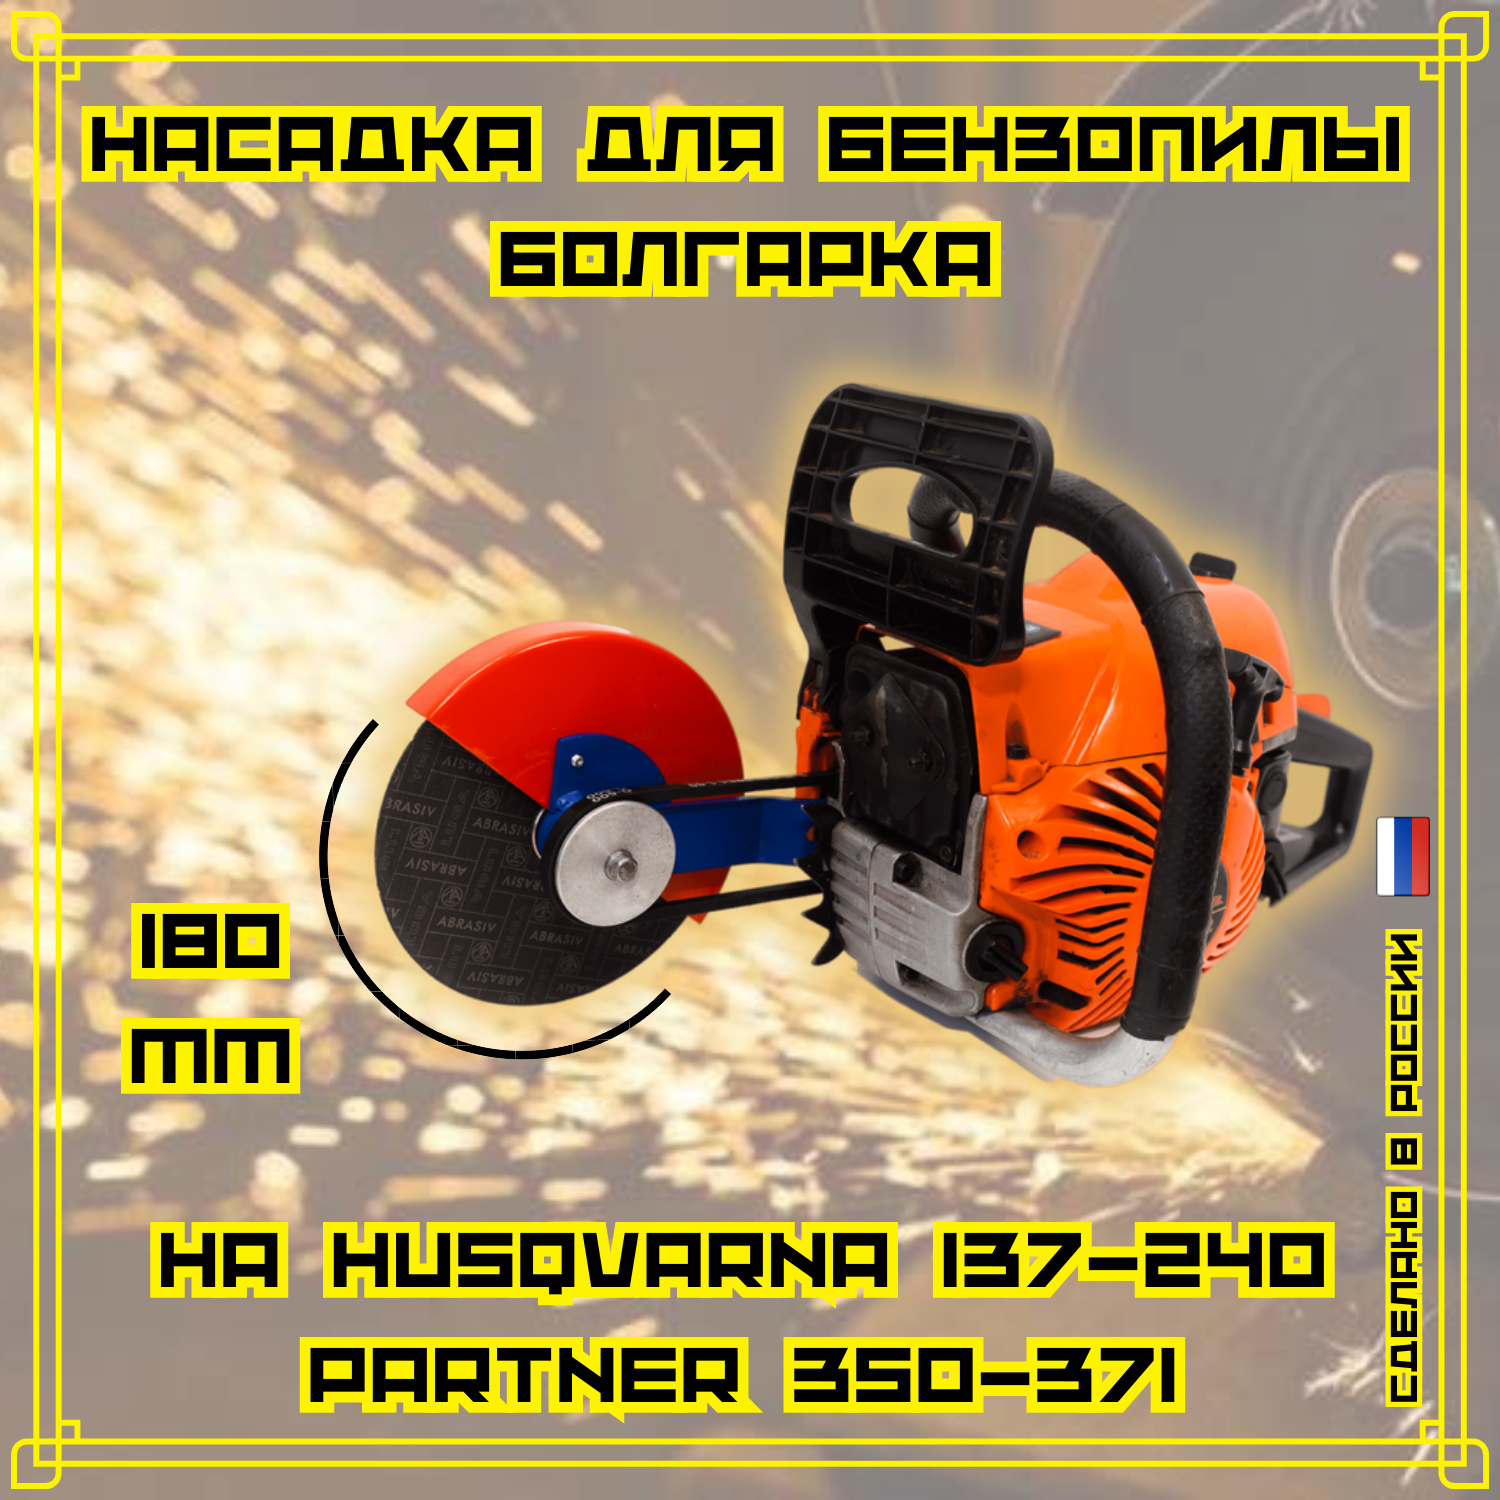 Насадка для бензопилы Болгарка D180 мм на Husqvarna 137-240; Partner350-371.